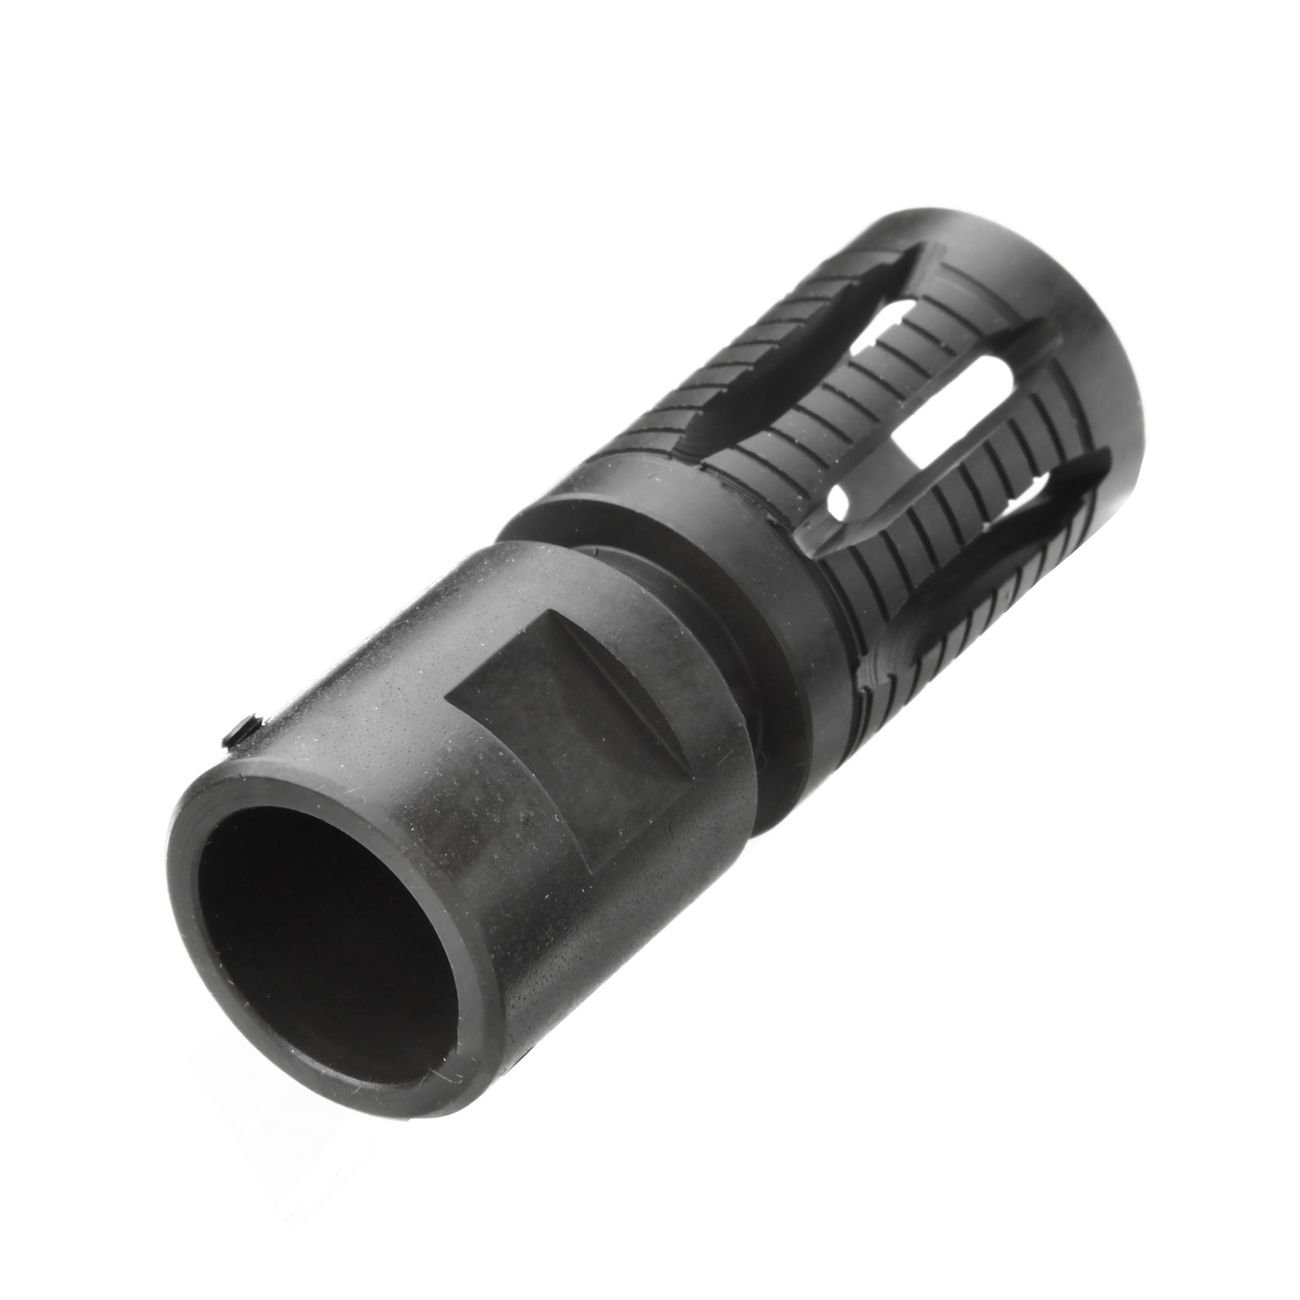 VFC Stahl G36 KSK QD Flash-Hider grau-schwarz 14mm- Bild 1